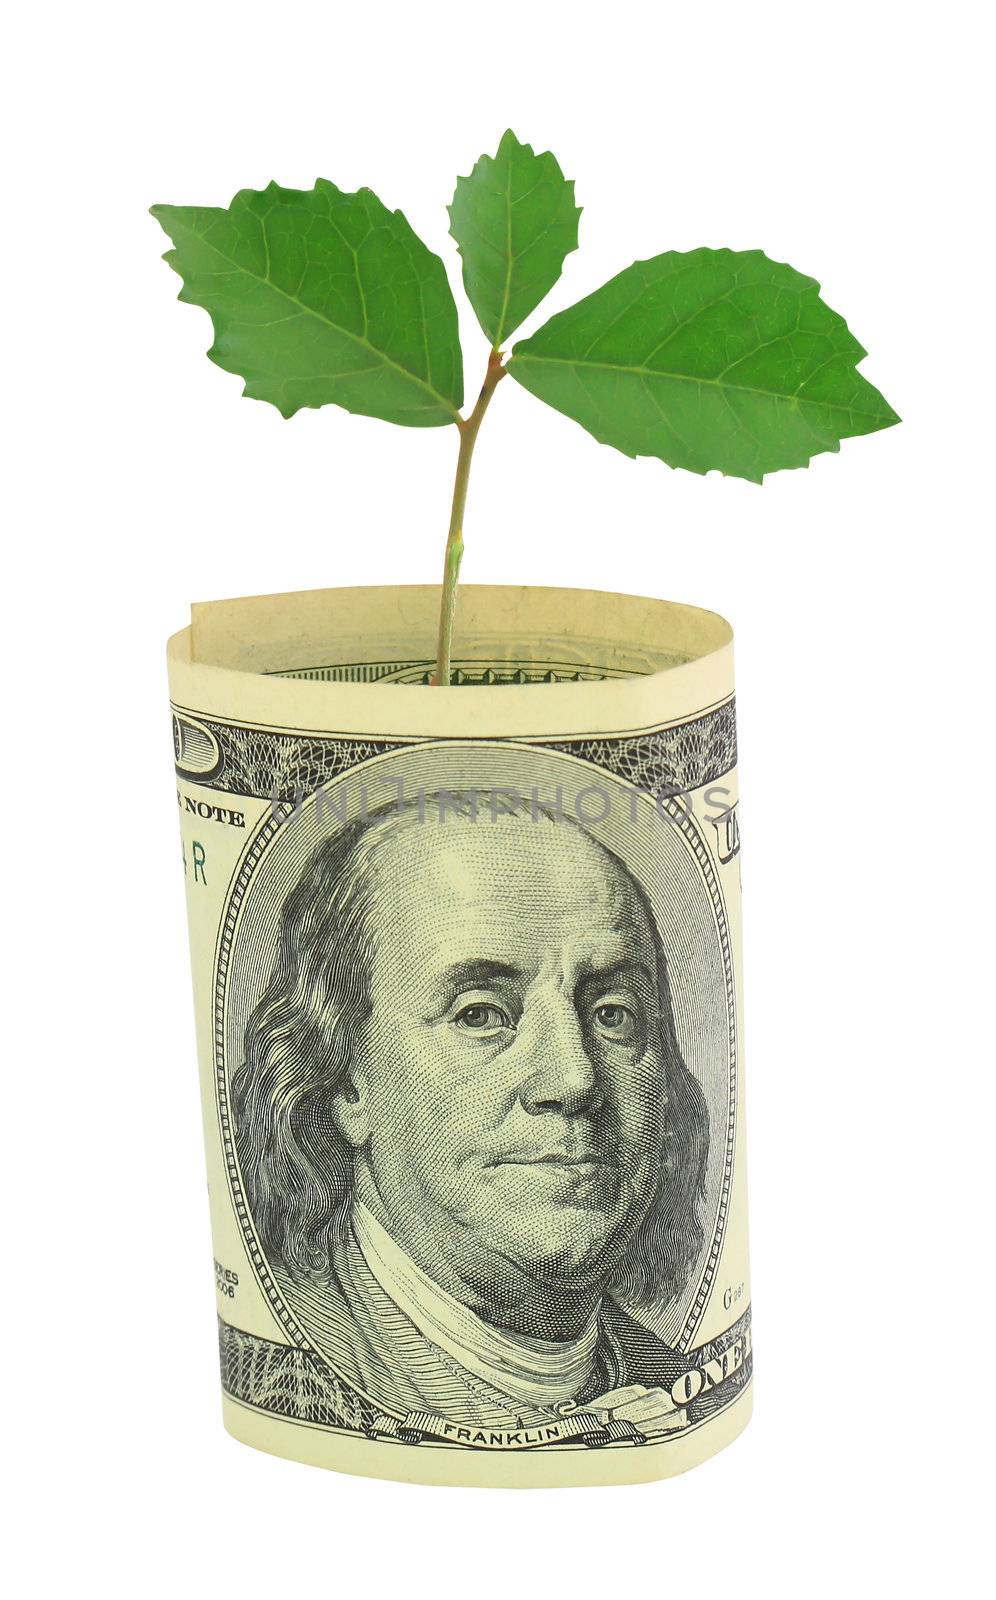 Tree growing from dollar bill